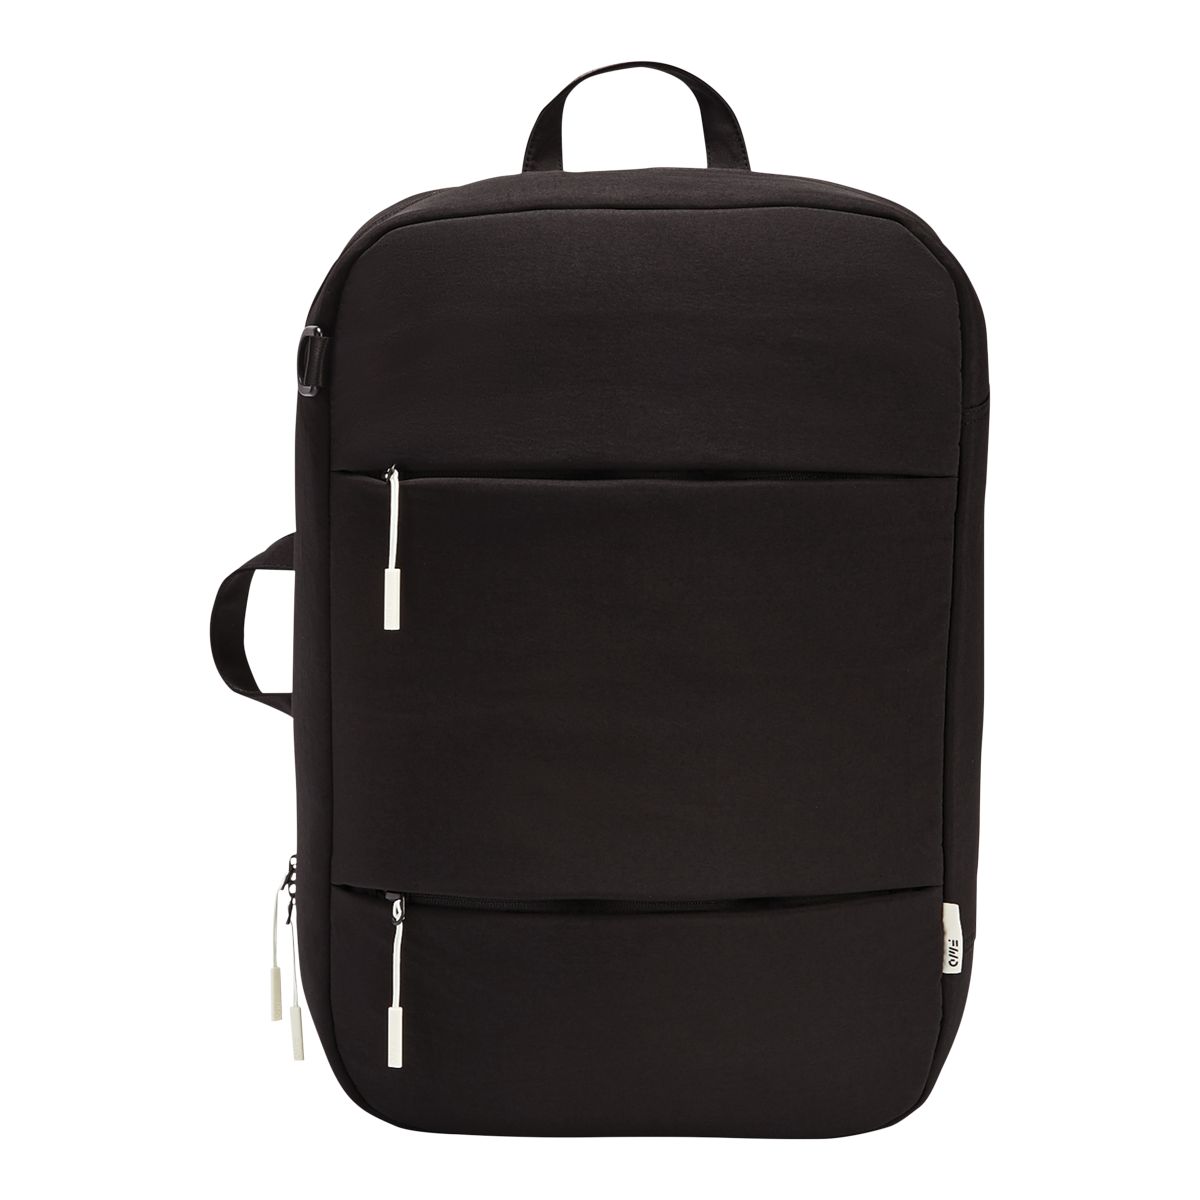 Fwd Unisex Convertible Travel Backpack, 26 L, Laptop Sleeve | SportChek